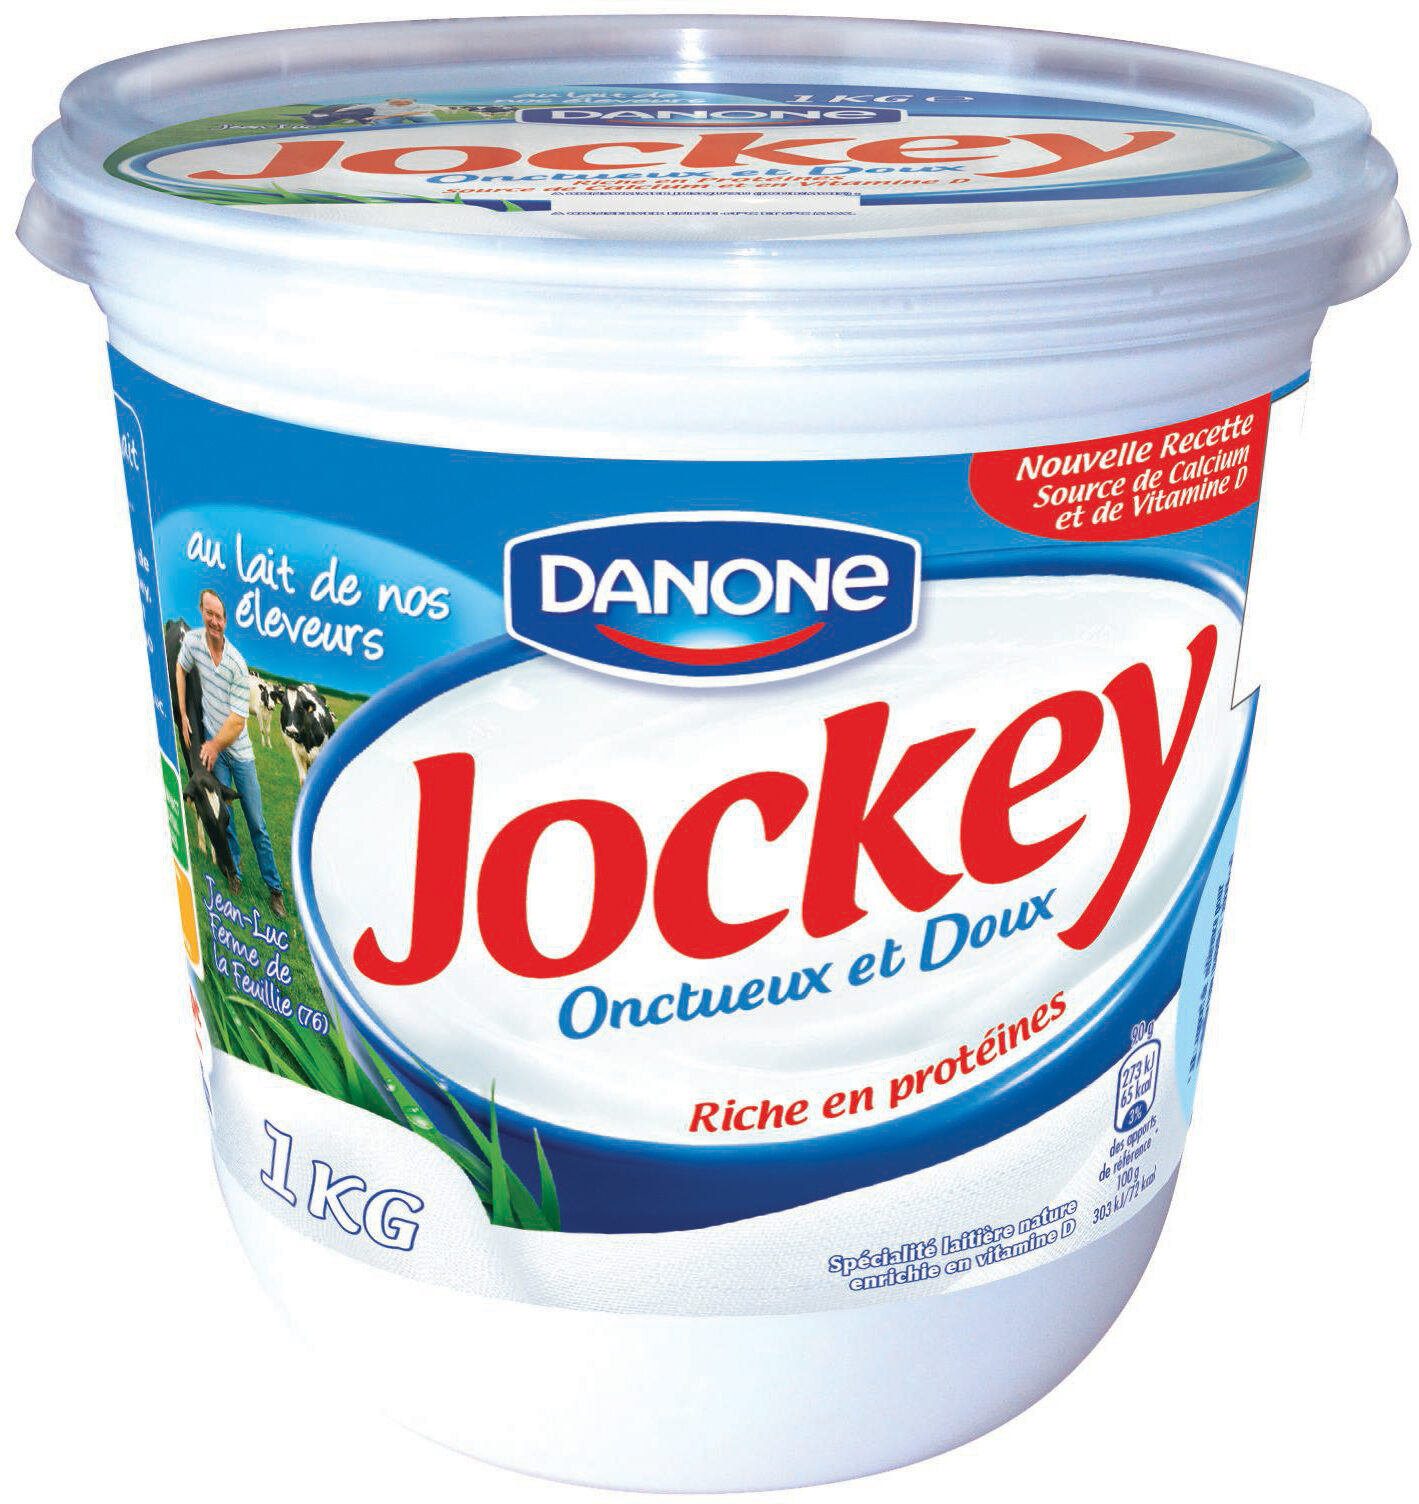 Jockey 3% de mg nature 1 kg x 1 - Produit